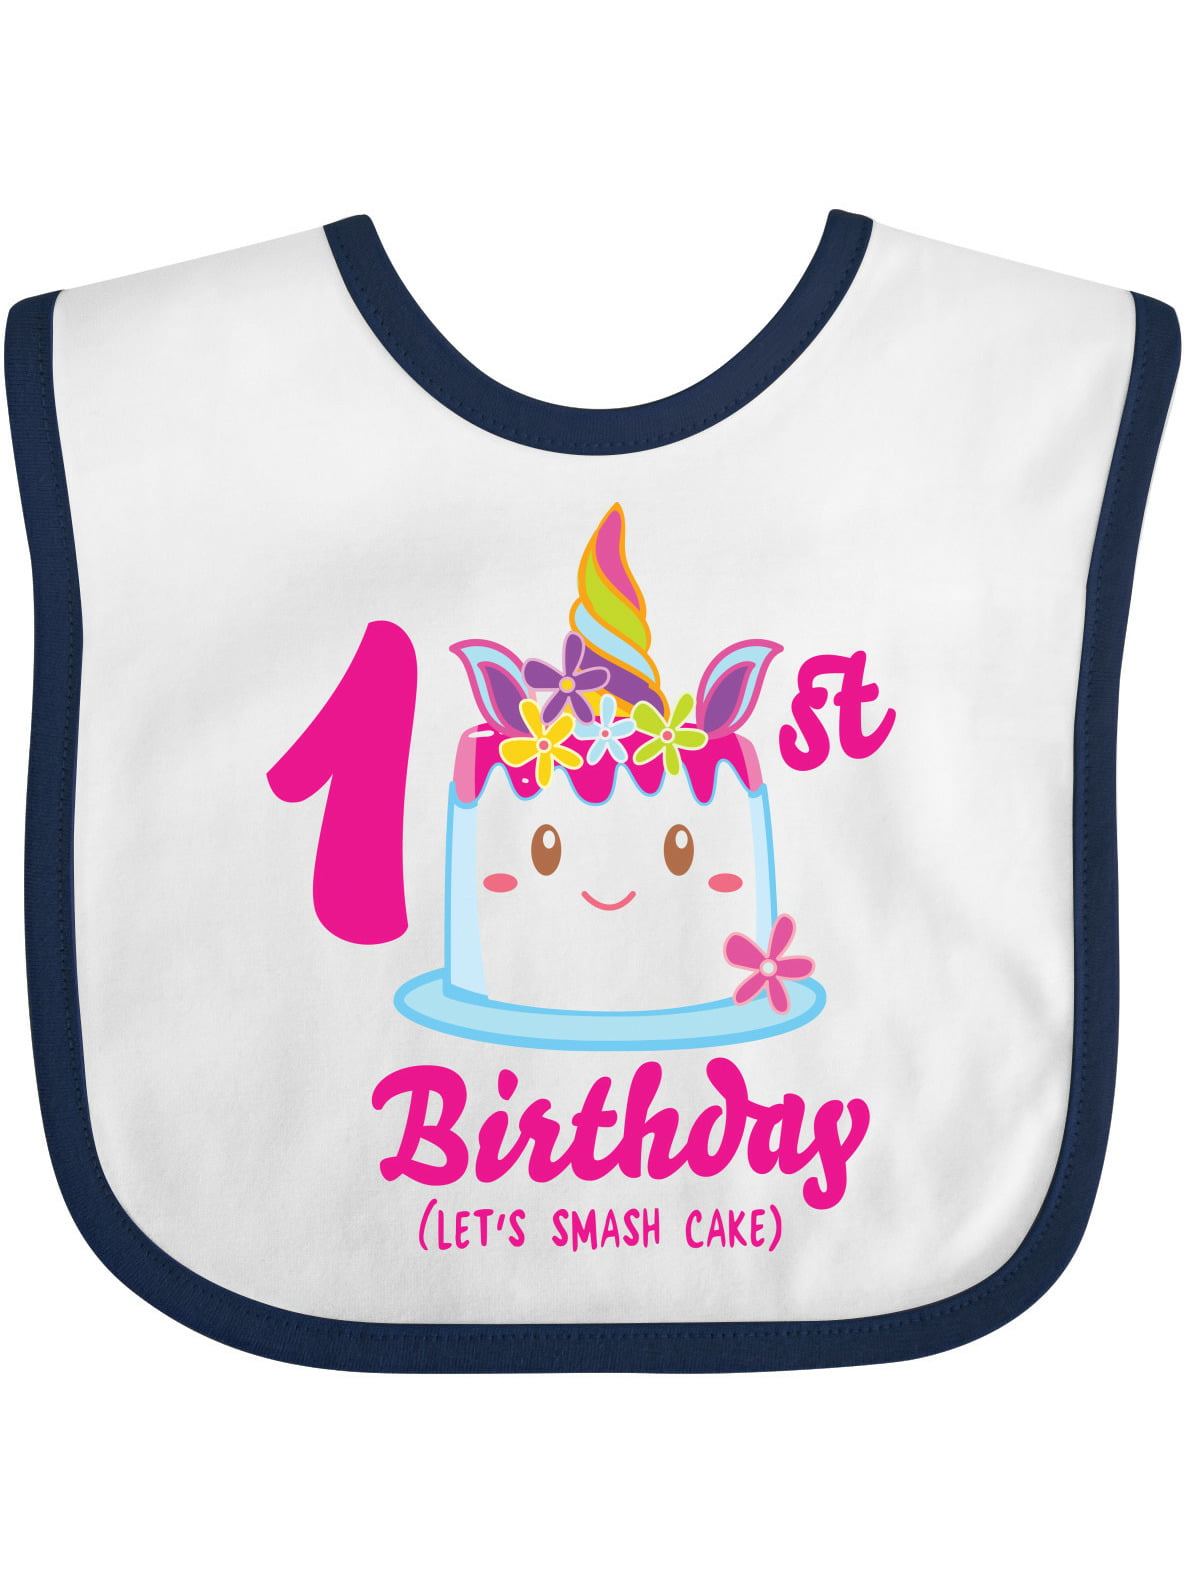 The Big One Fishing Theme Party Baby Bib for Boys 1st Birthday Party Smash Cake Bib 